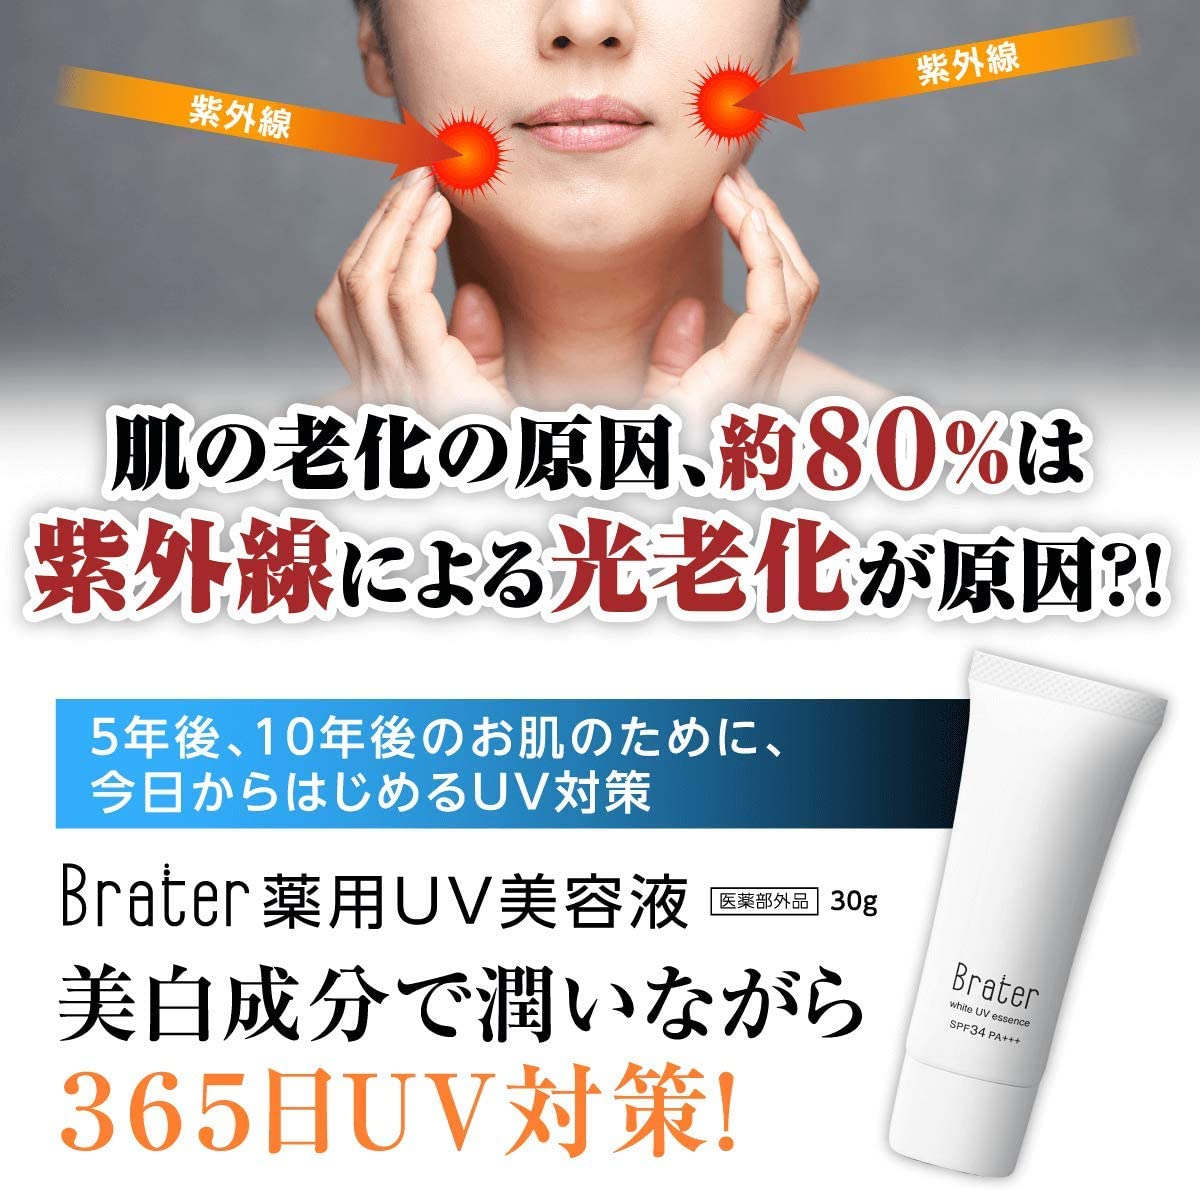 Brater(ブレイター) 薬用UV美容液の商品画像3 